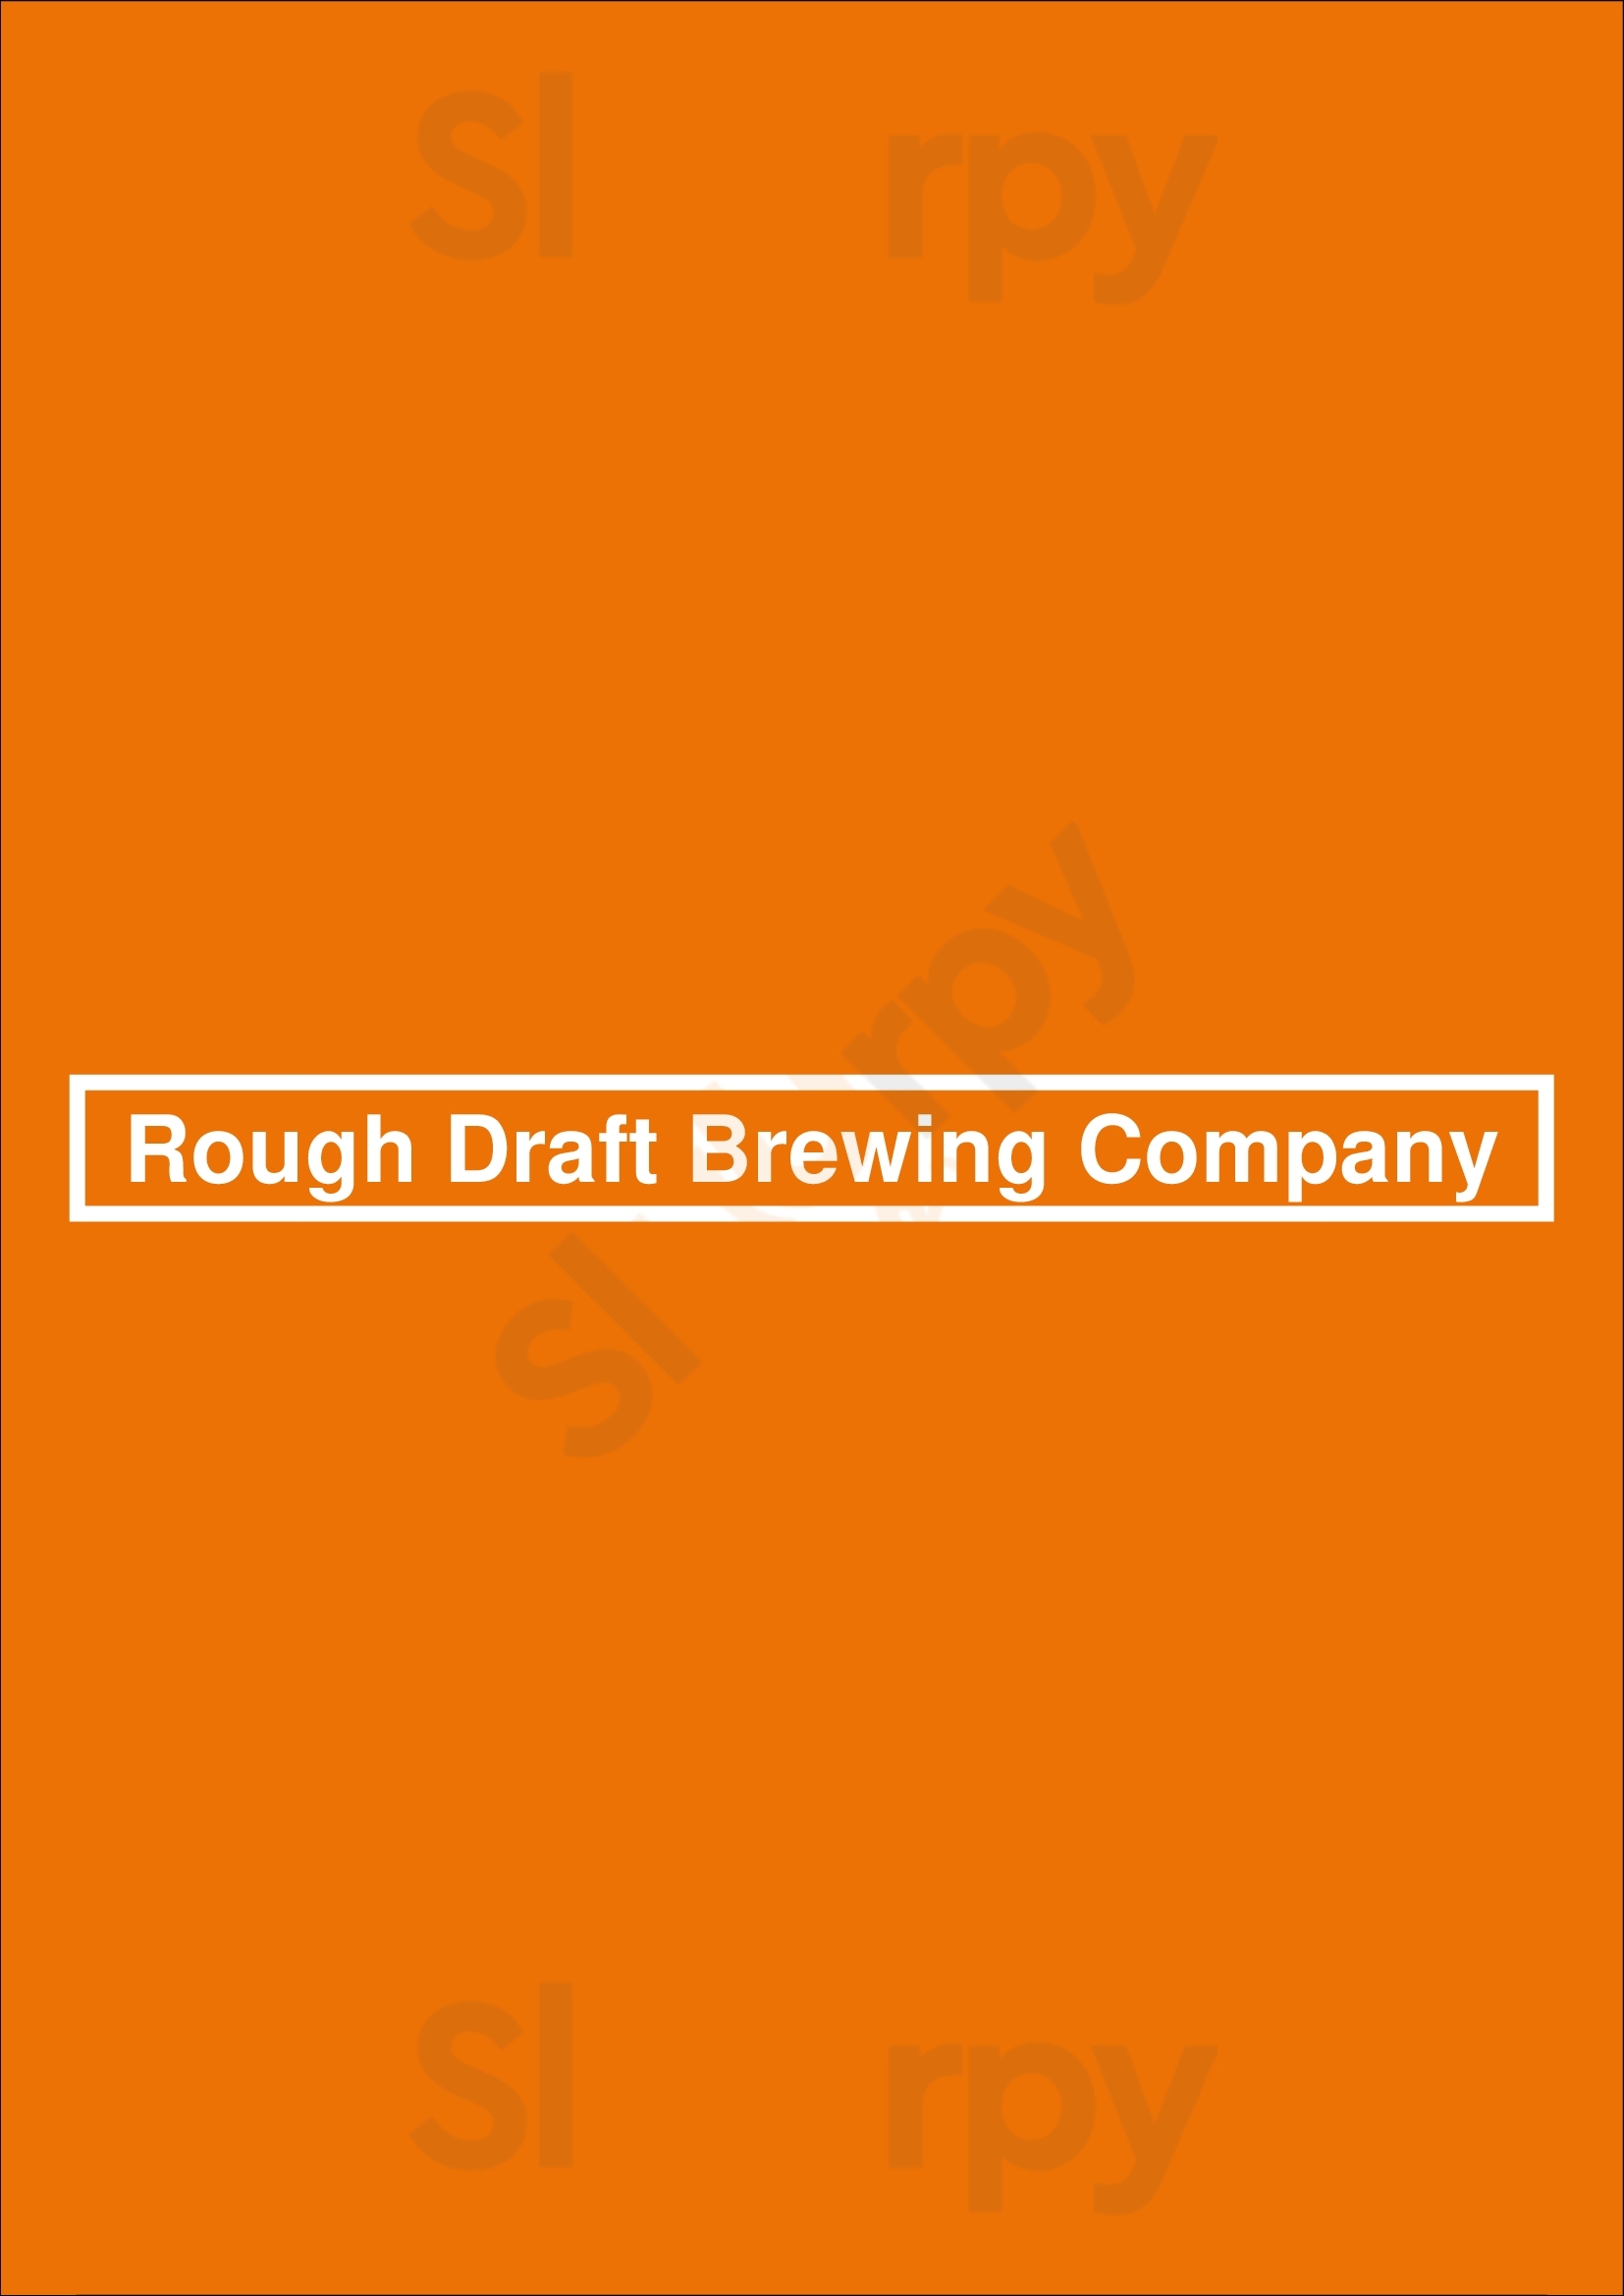 Rough Draft Brewing Co San Diego Menu - 1